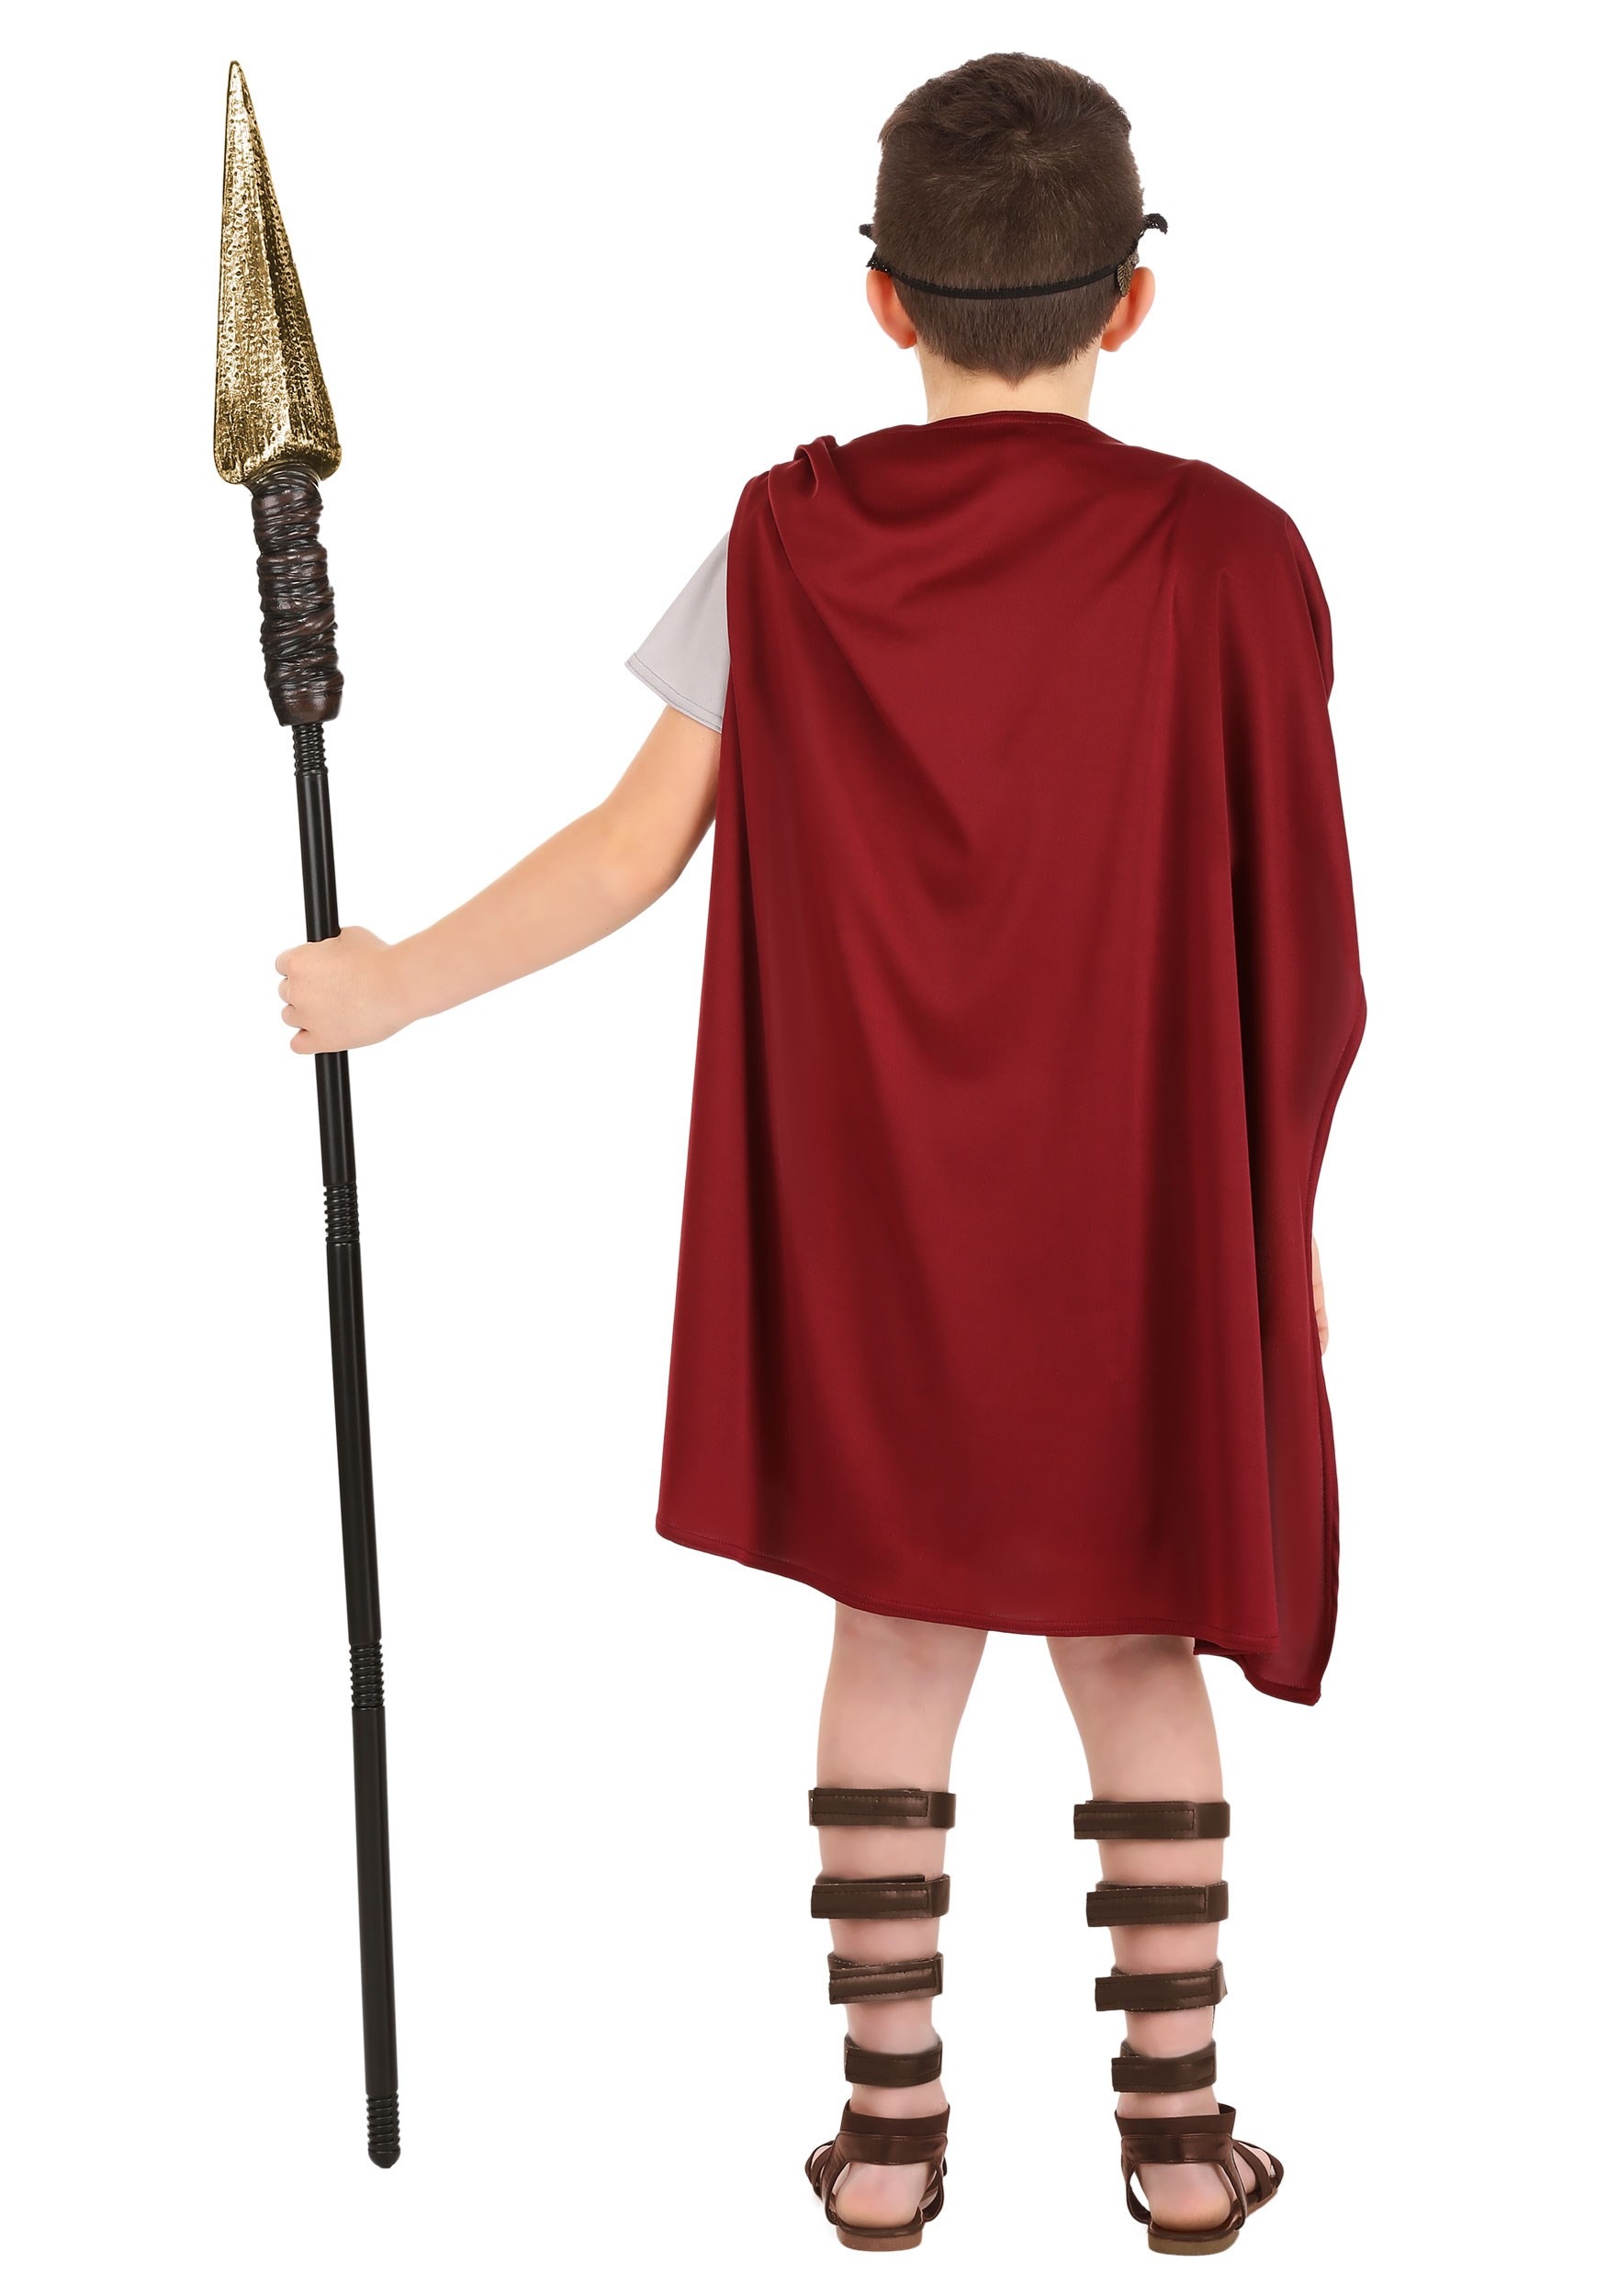 Details about   Kids Gladiator Roman Soldier  Costume Hero Greek Warrior Book Week Boys Medieval 